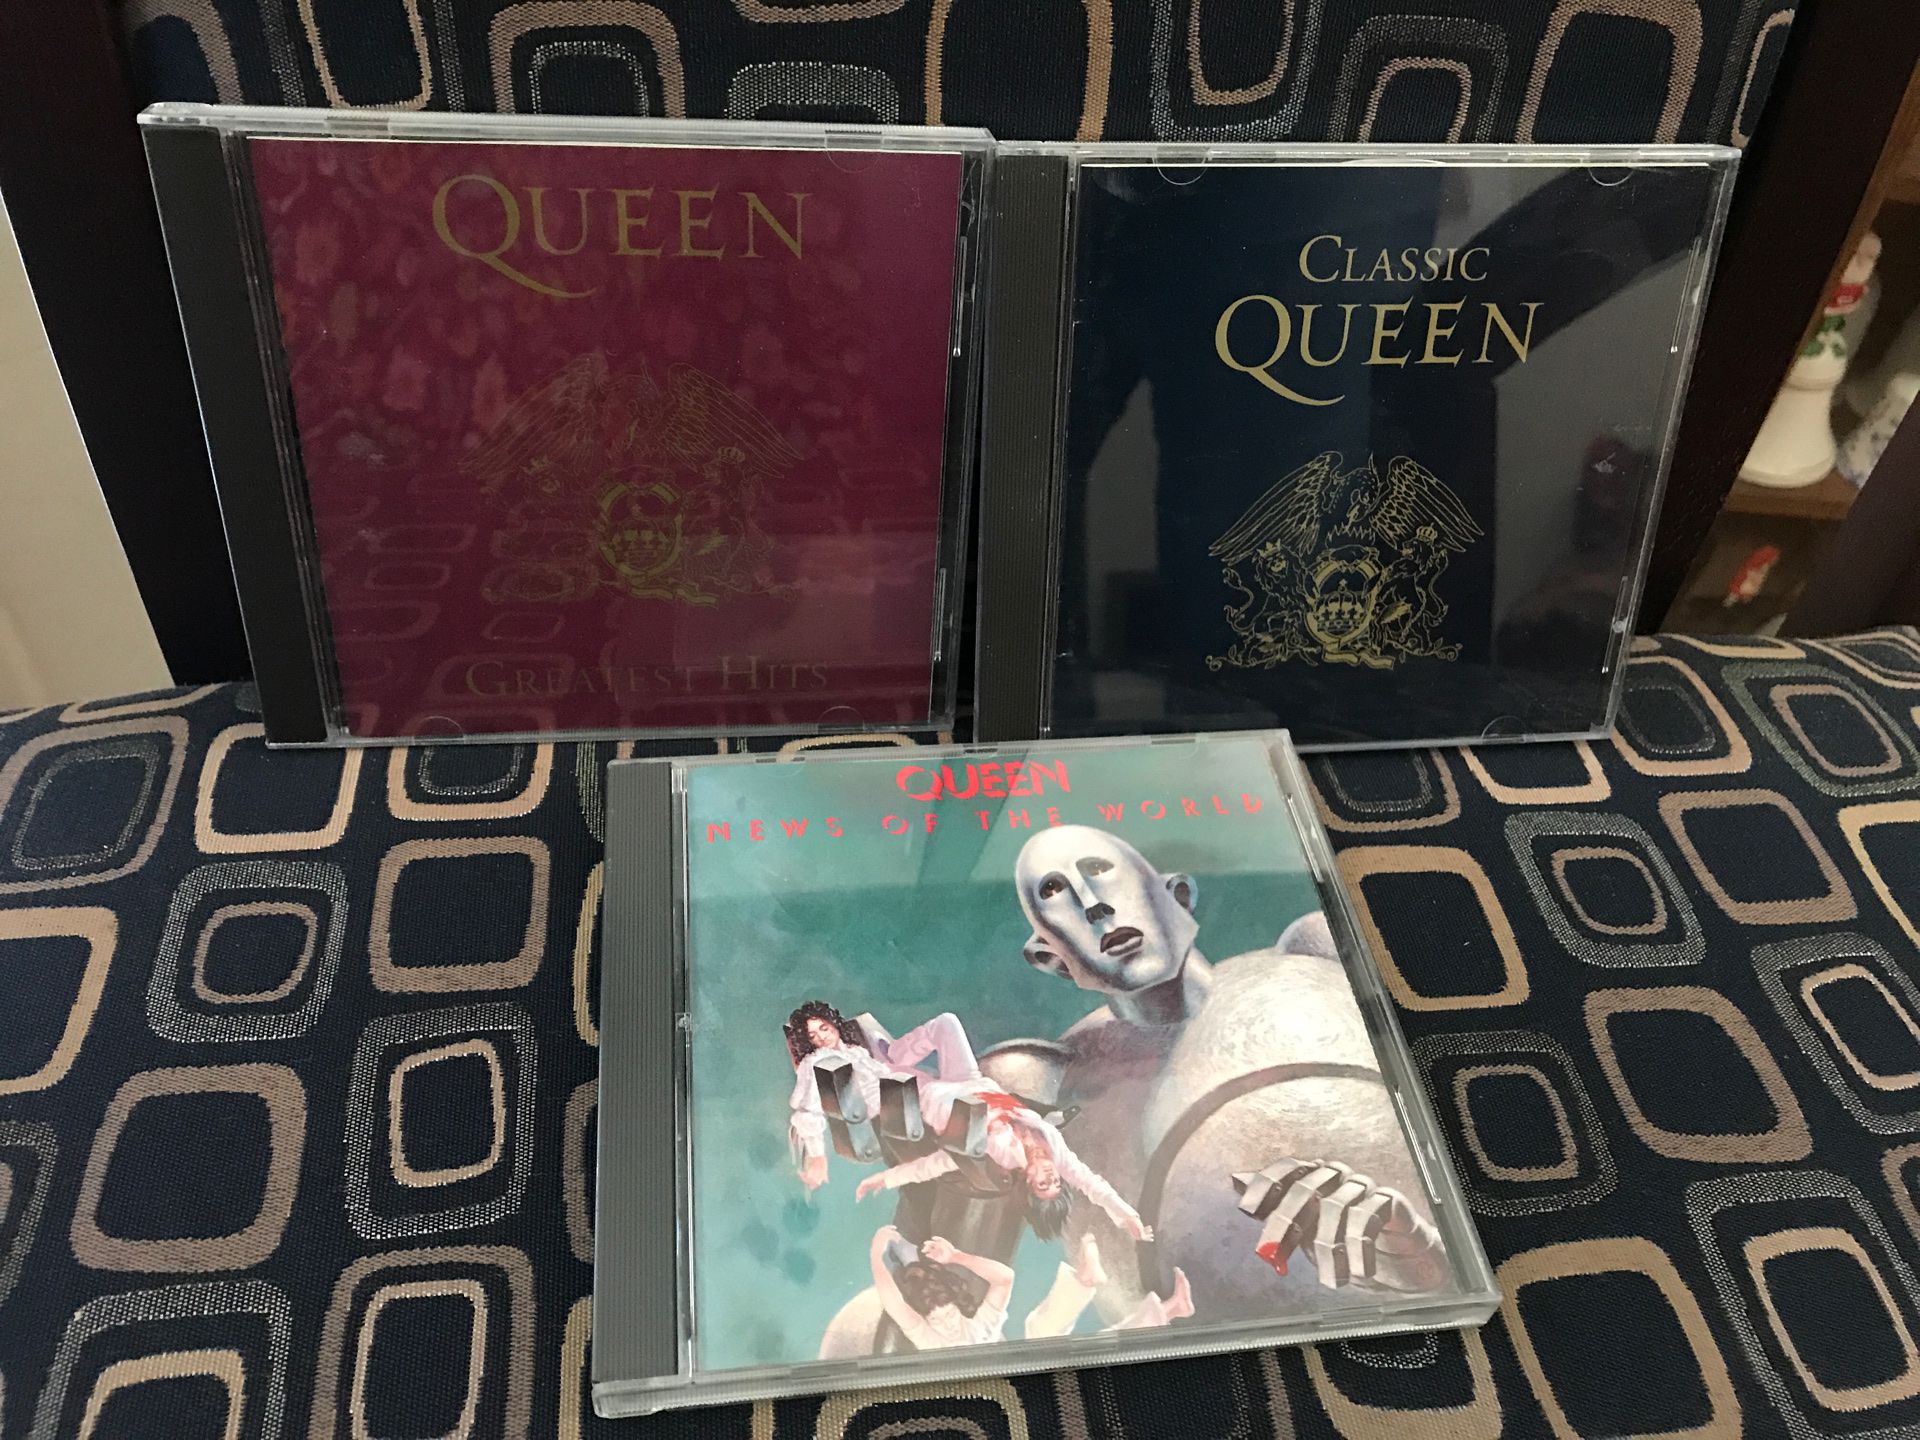 3 queen cds